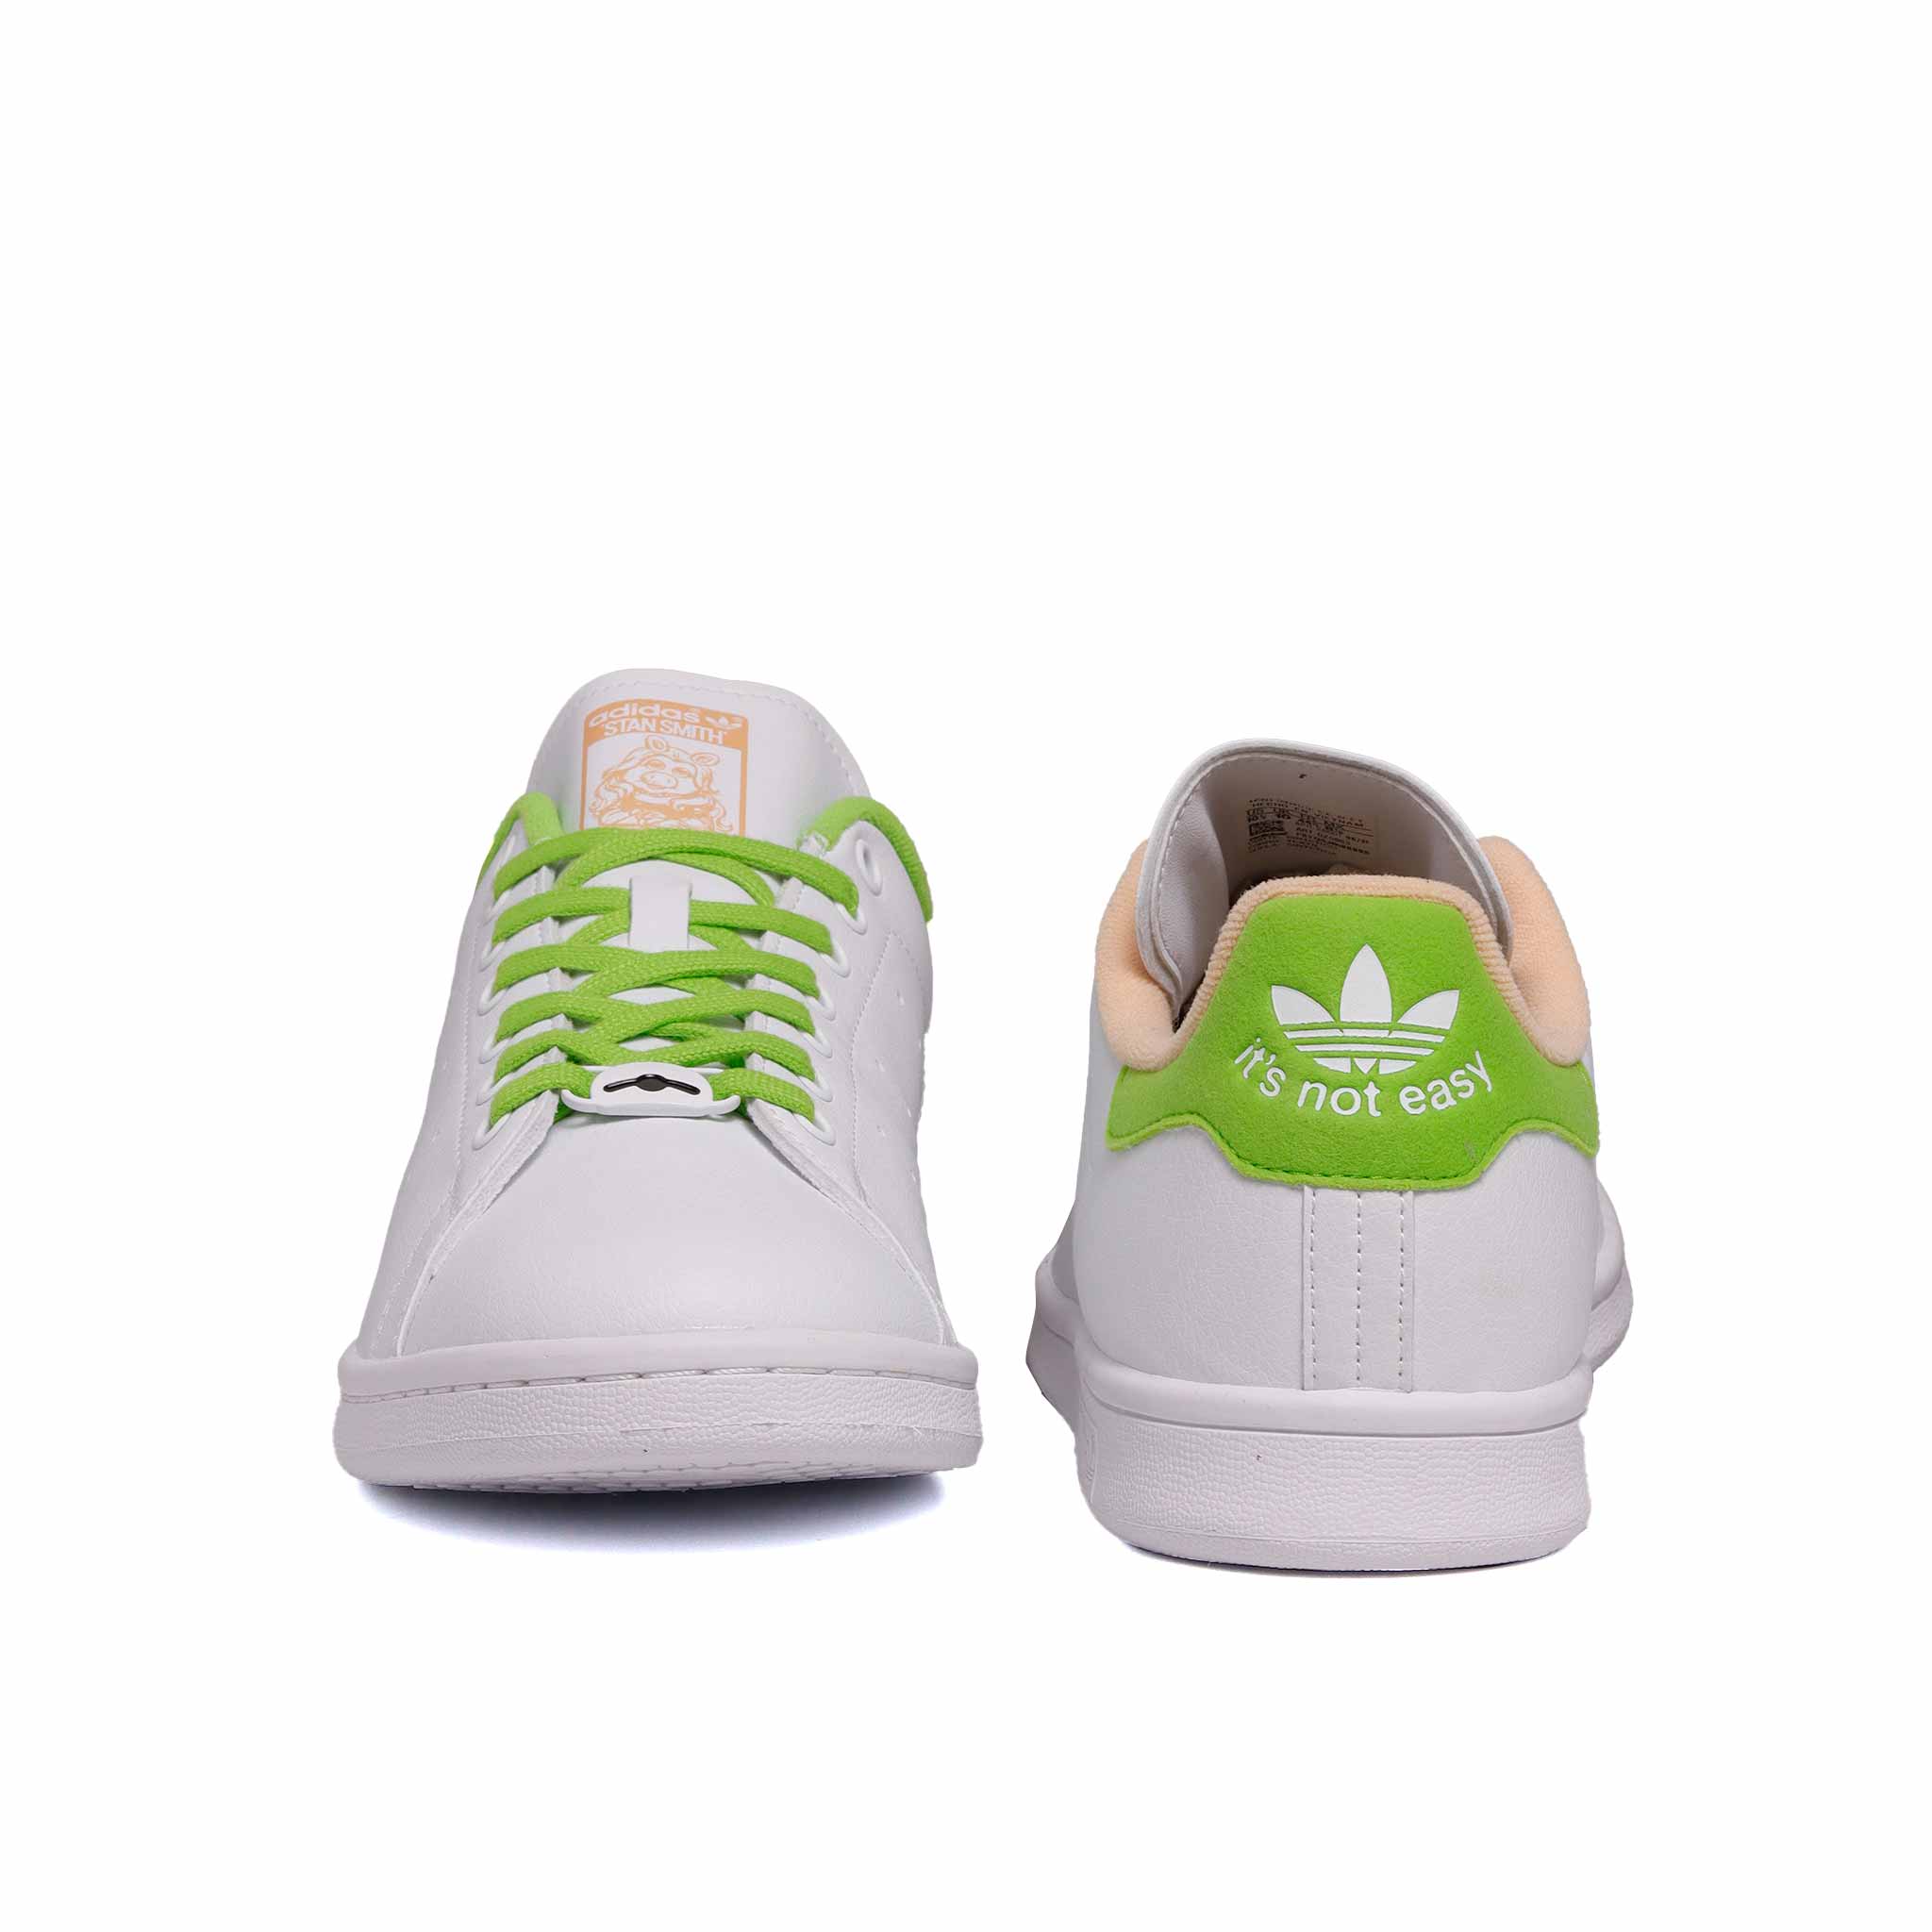 Tenis Adidas Stan Smith Miss Piggy y Kermit